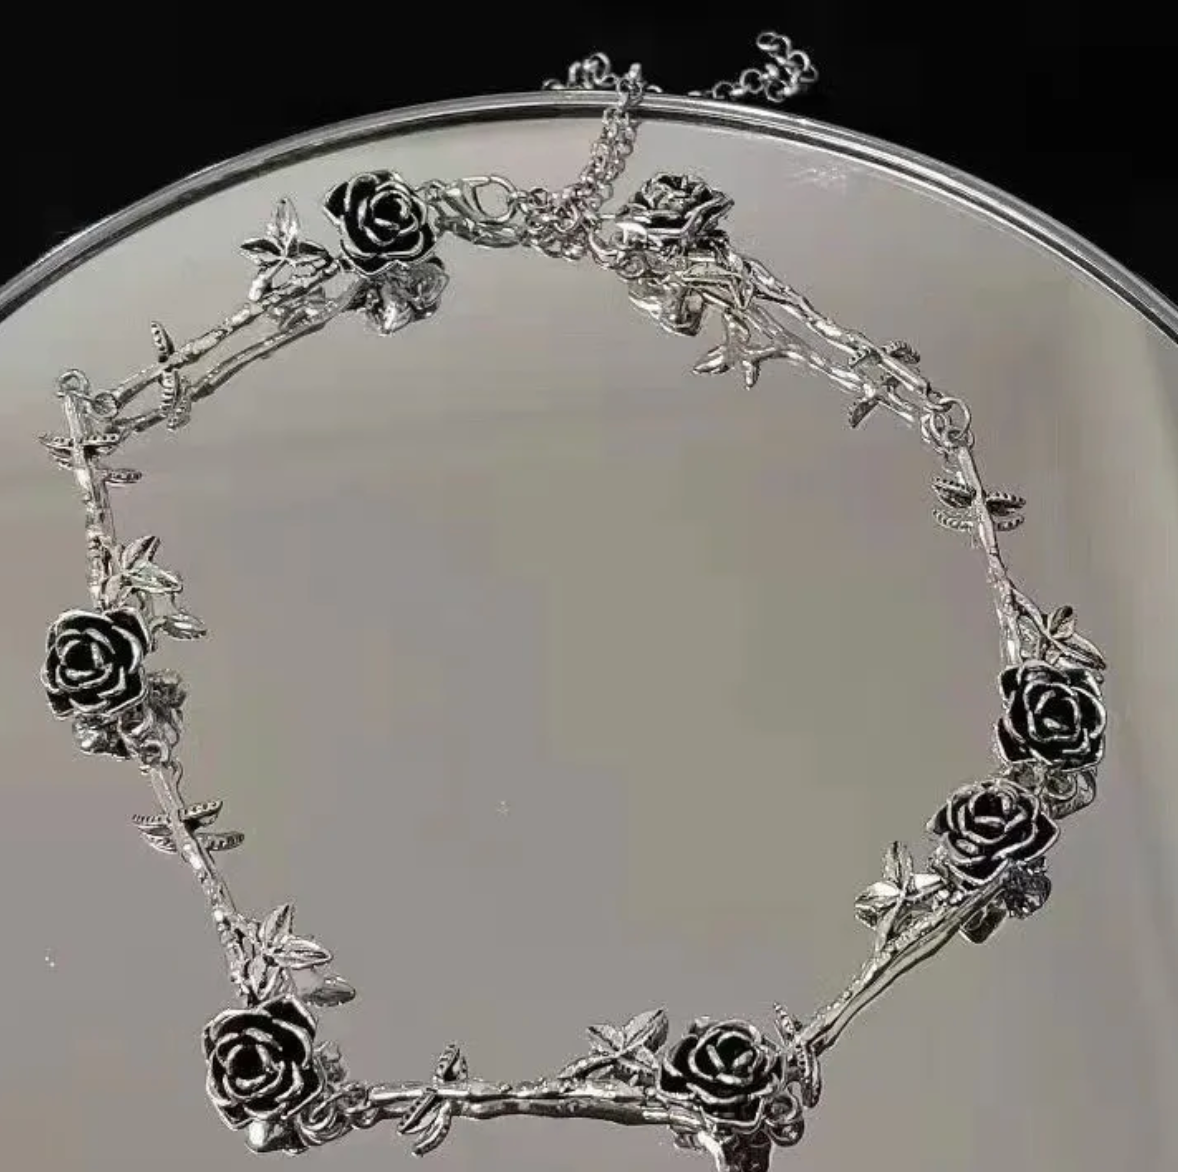 Rose Choker Necklace